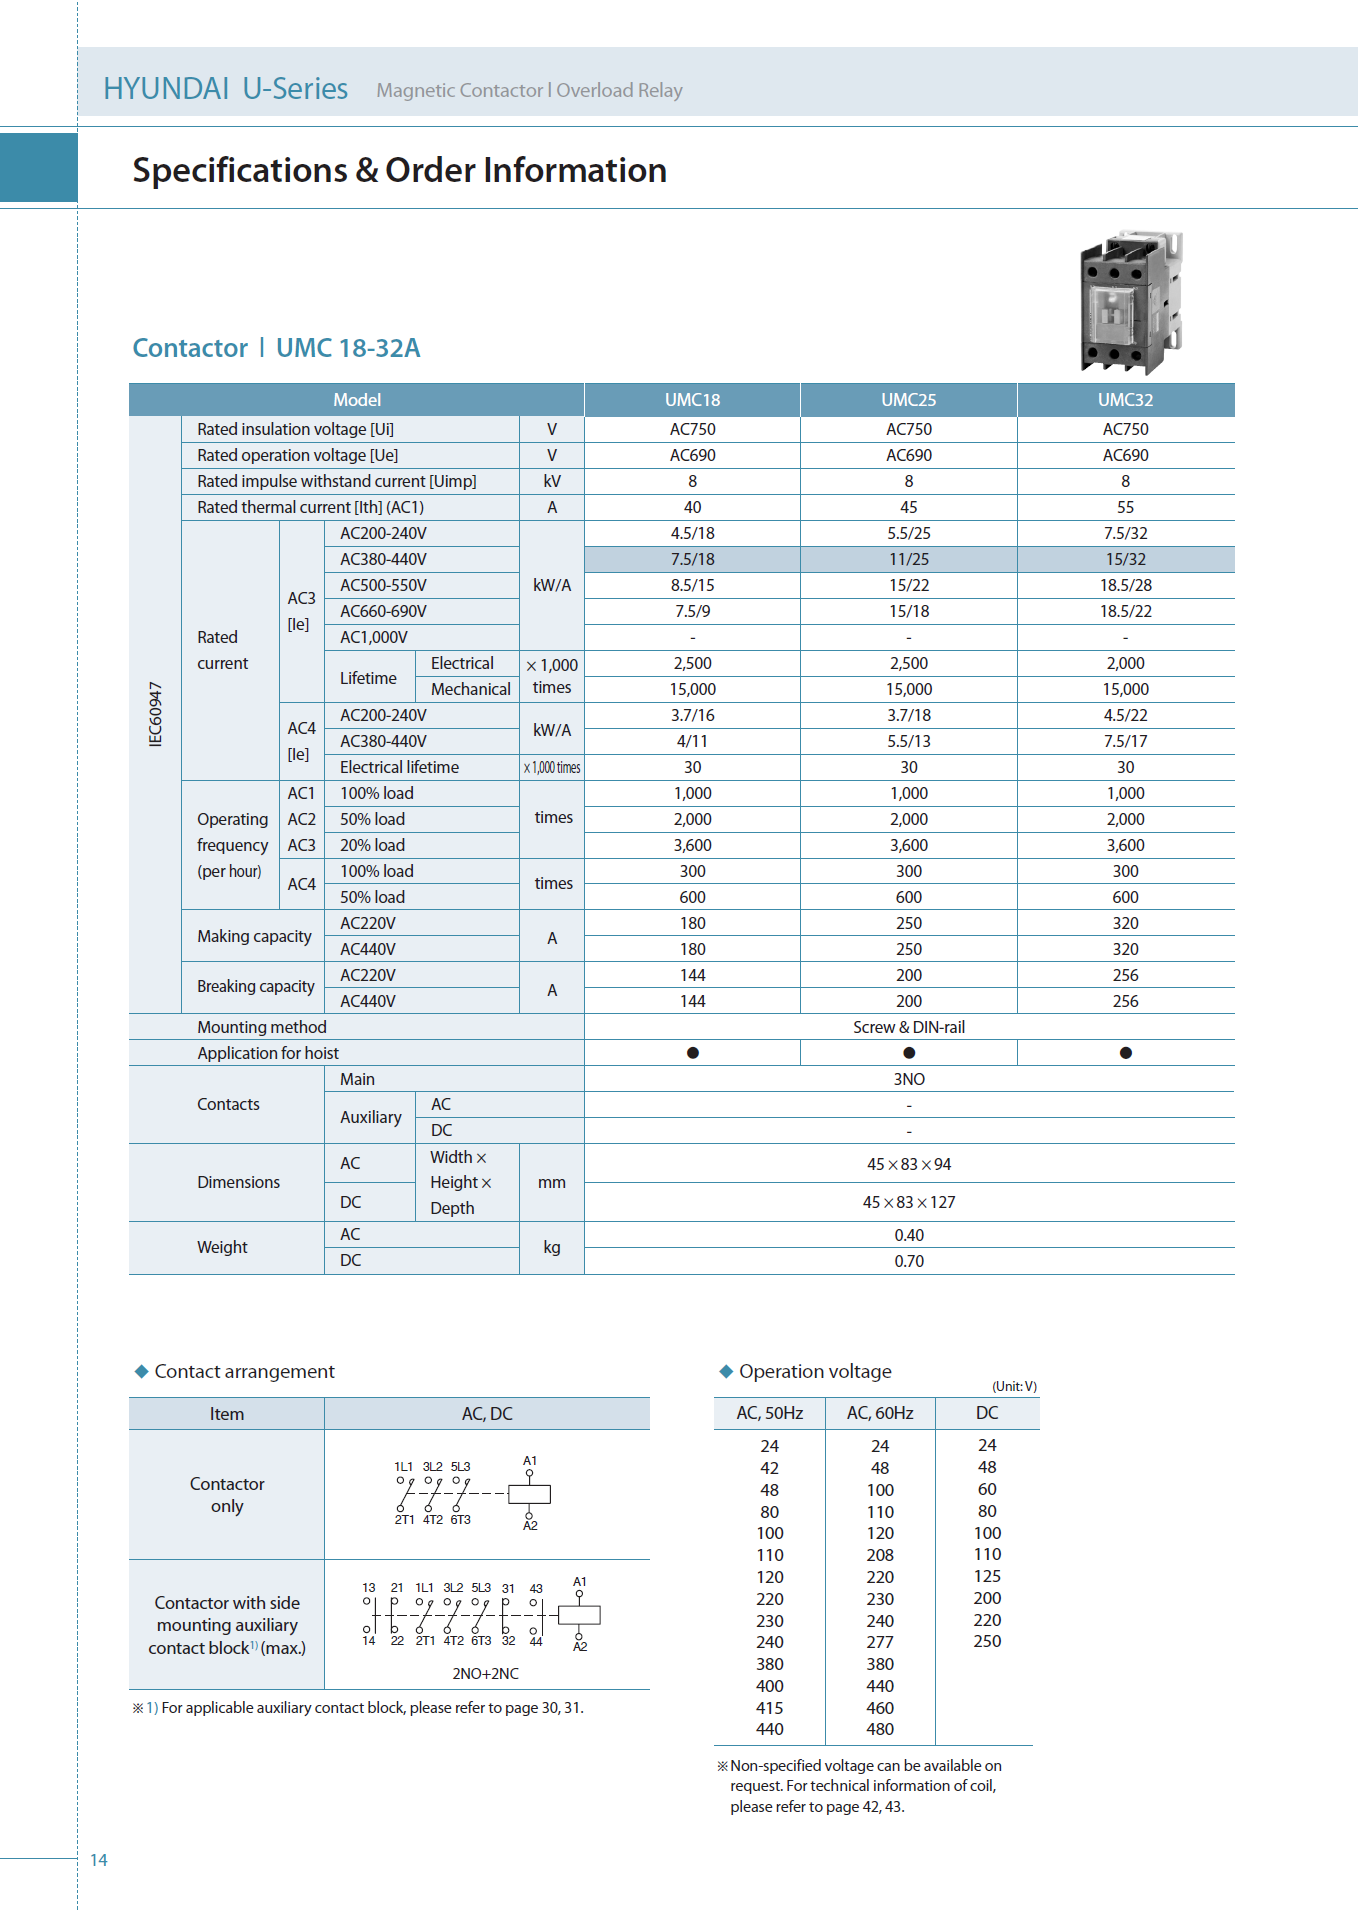 Hyundai Contactors Accessories - Control Coil UMCOL115 For UMC115/130/150